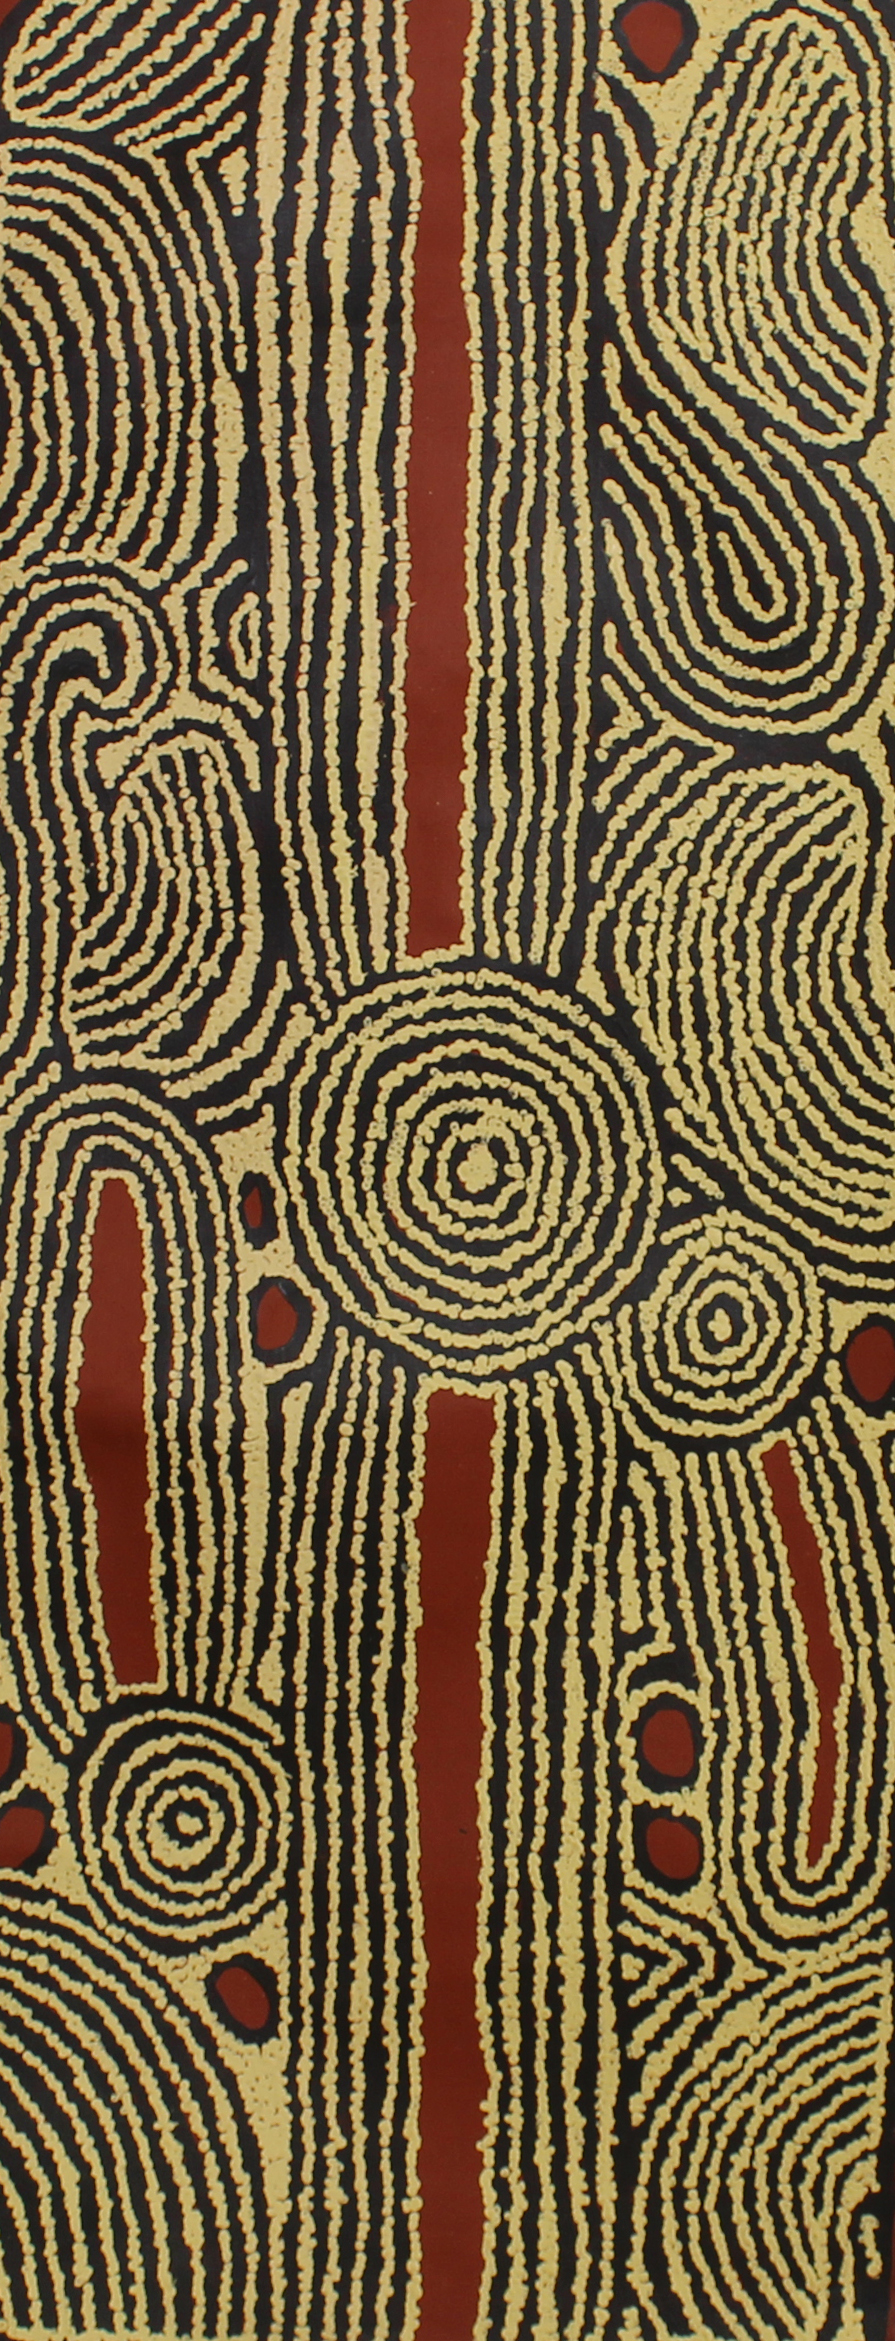 Ningura Napurrula Aboriginal Artist